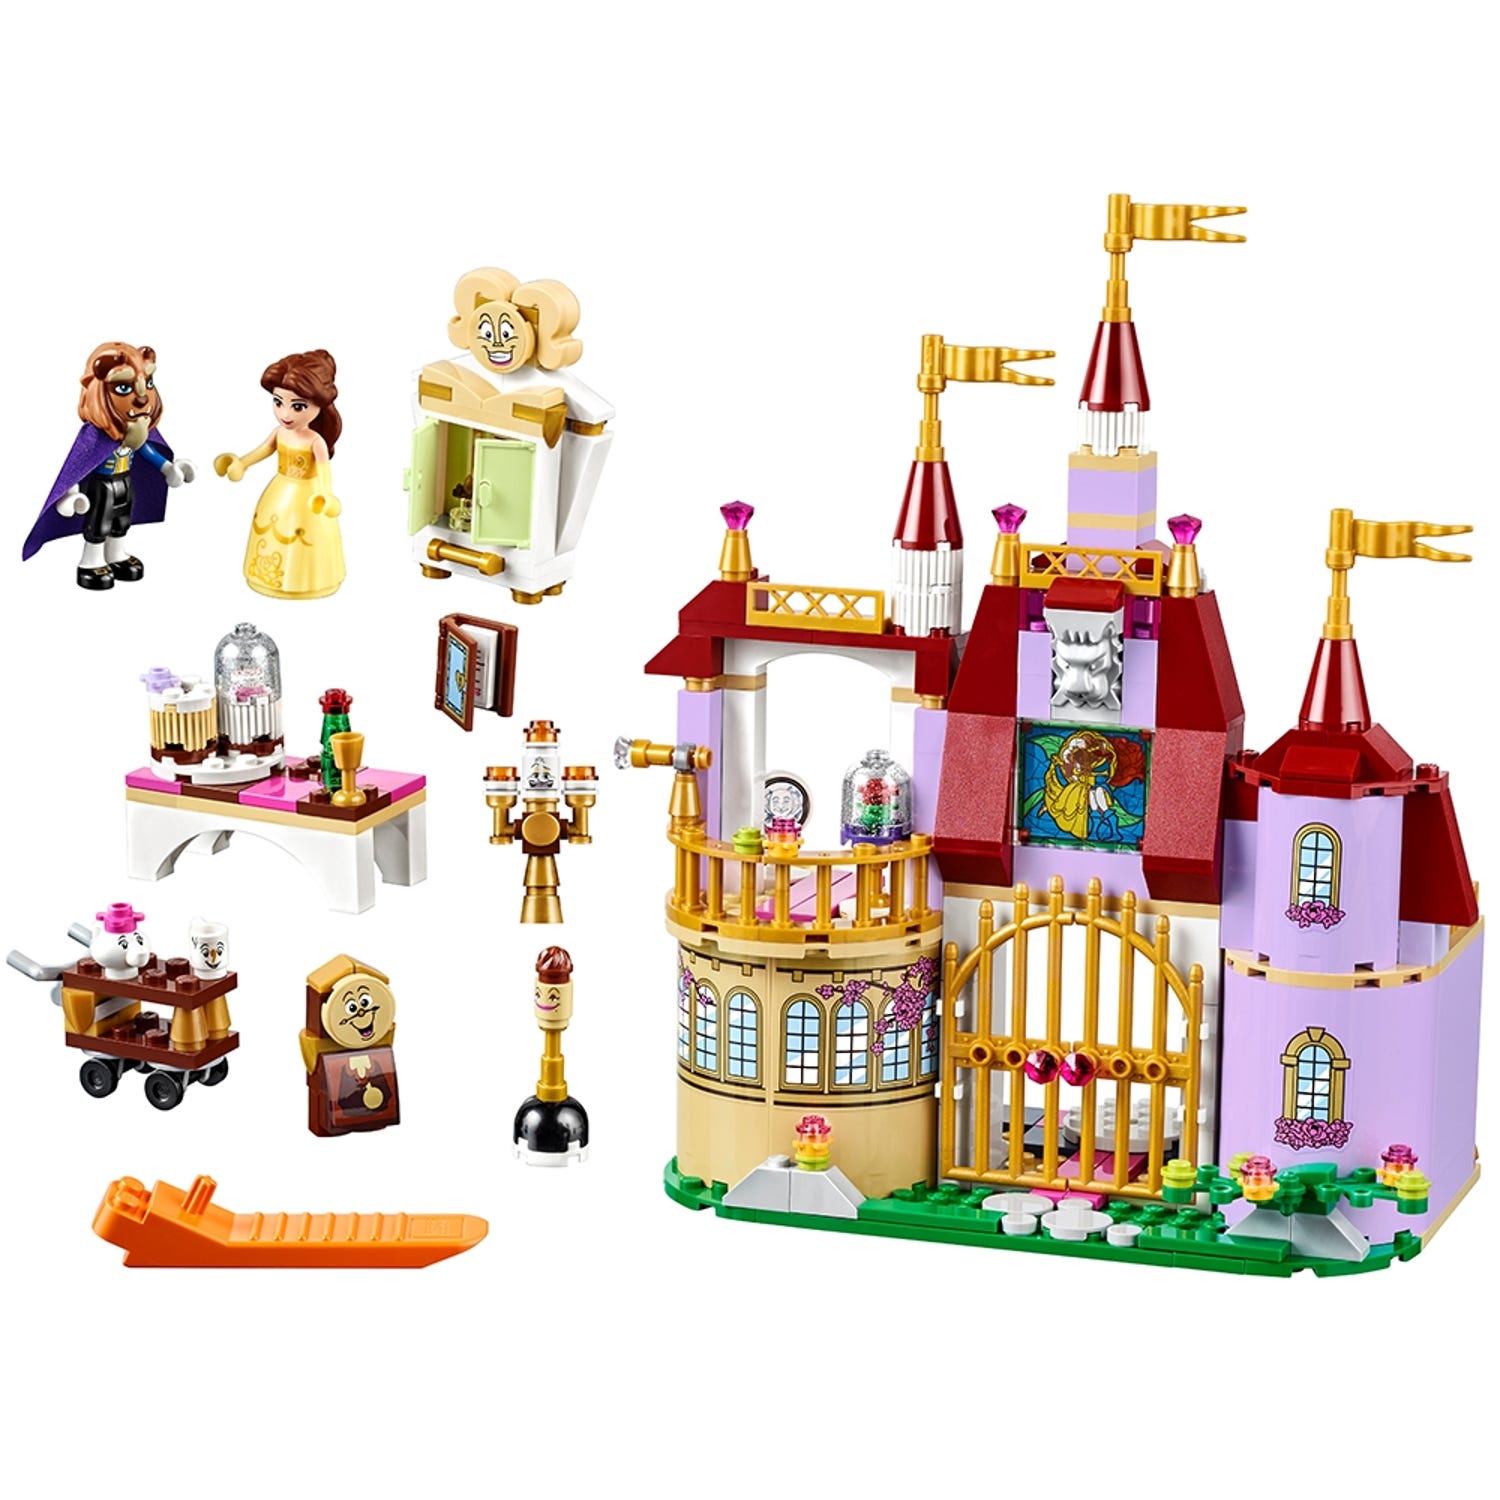 Belle S Enchanted Castle 41067 Disney Buy Online At The